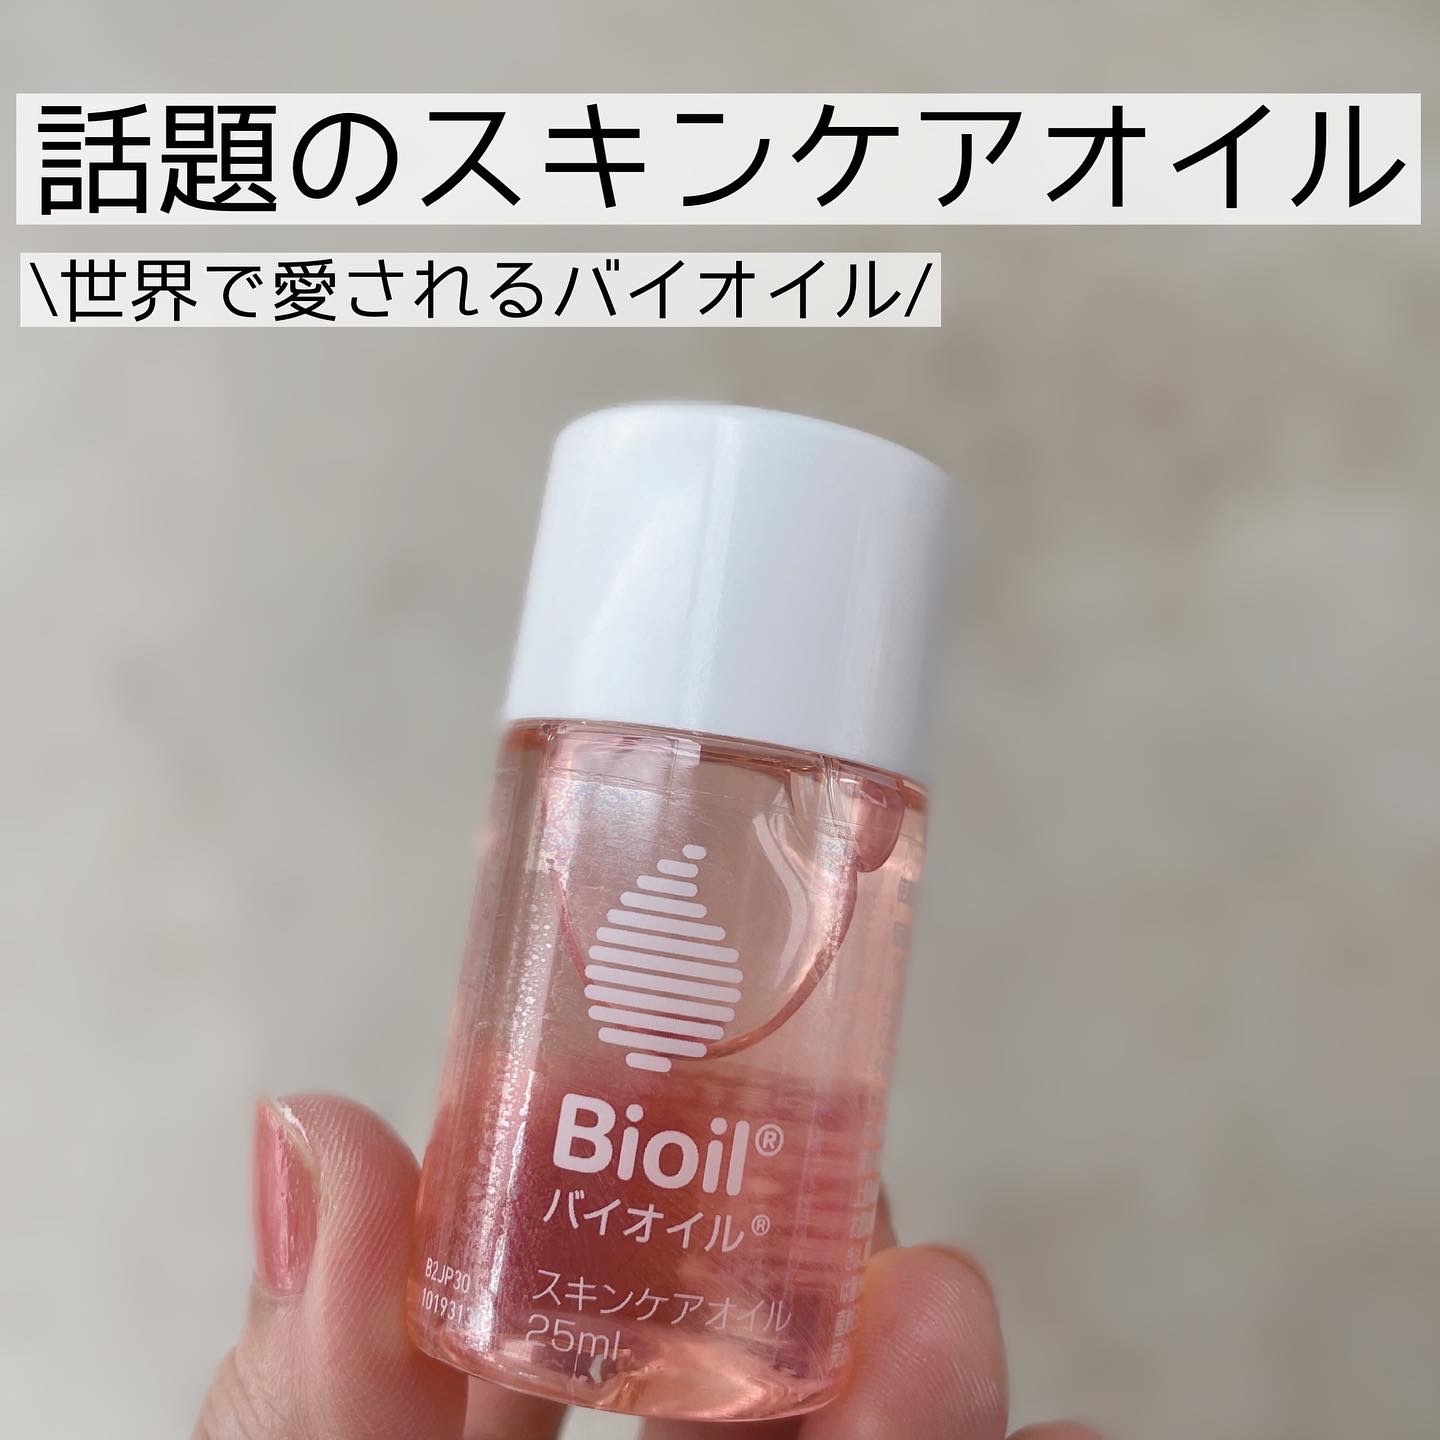 Bioil(バイオイル) スキンケアオイルの良い点・メリットに関するなゆさんの口コミ画像2